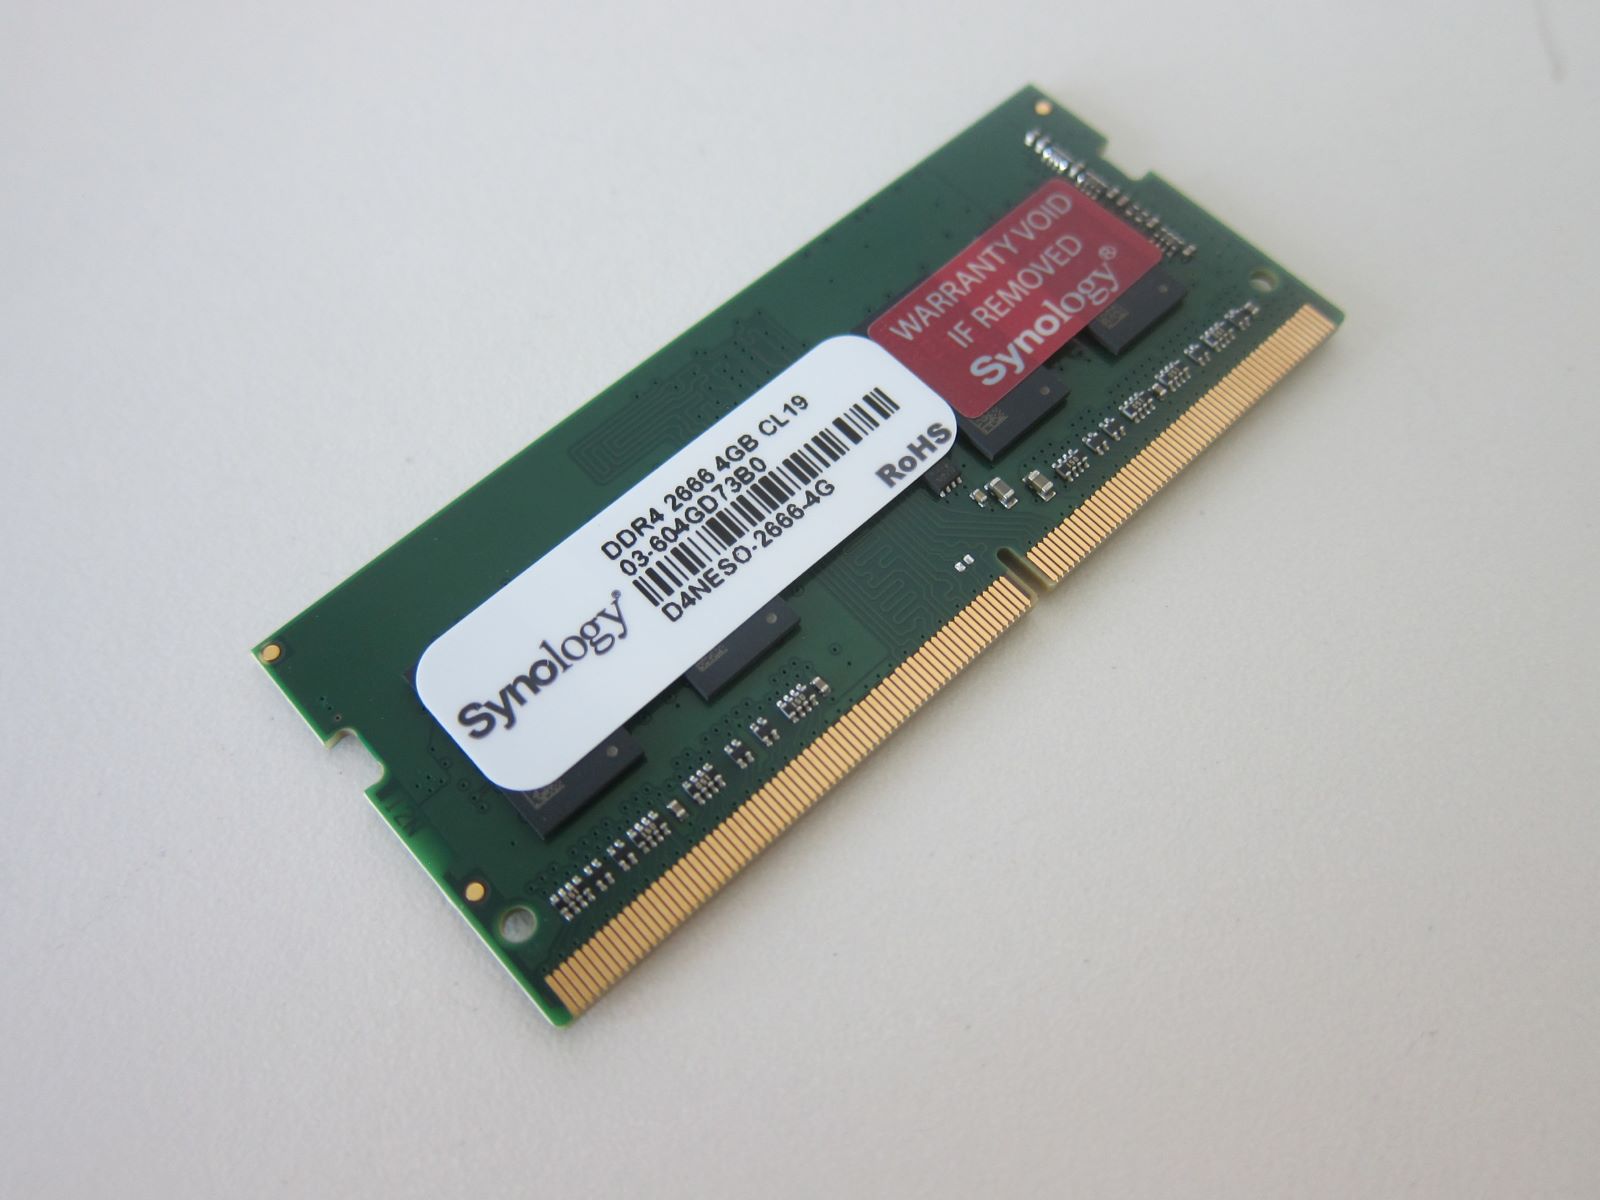 16GB AM-D4ES01-16G 260-Pin DDR4 2666MHz ECC So-dimm RAM | Memory for  Synology